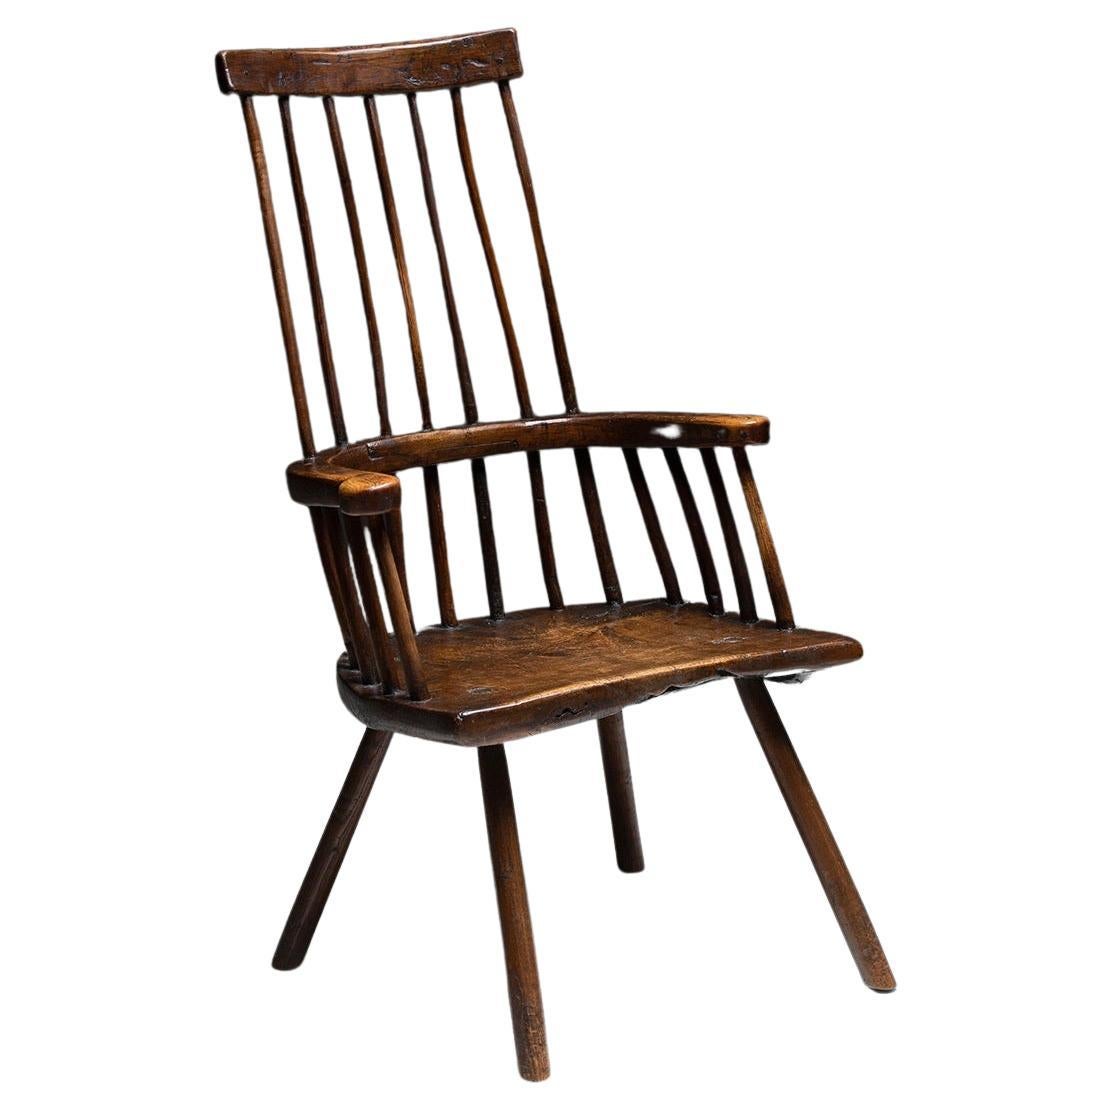 Primitive Windsor Chair, England, circa 1780